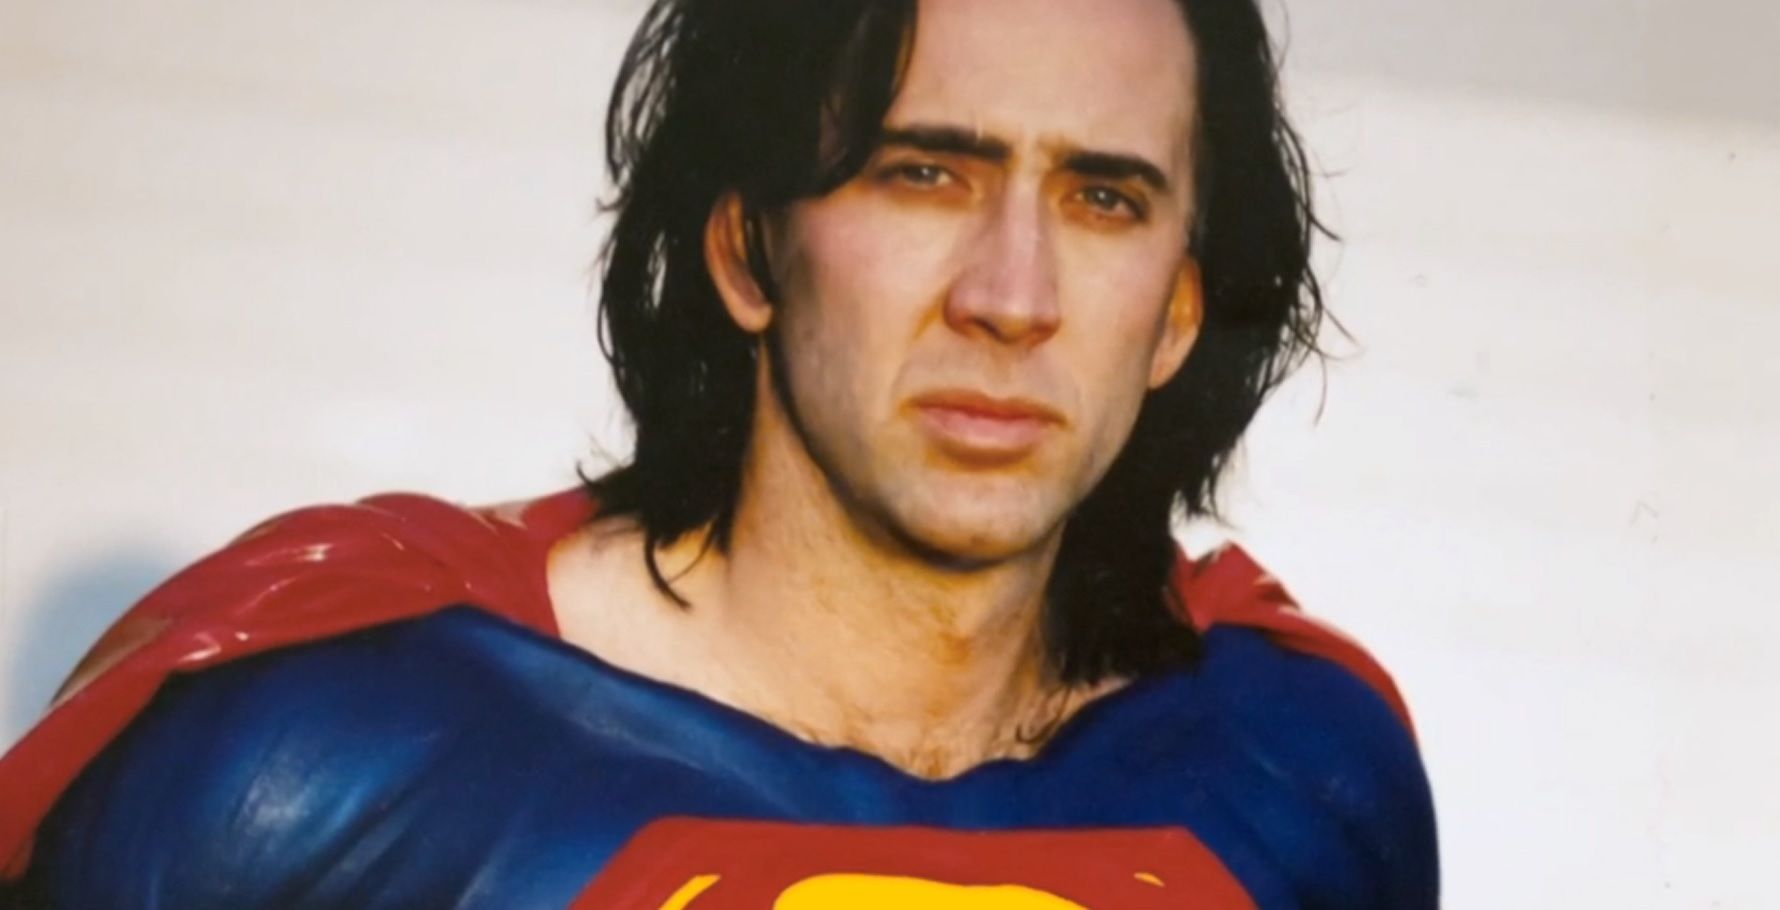 Nicolas Cage in screentest photo for Tim Burton's Superman Lives